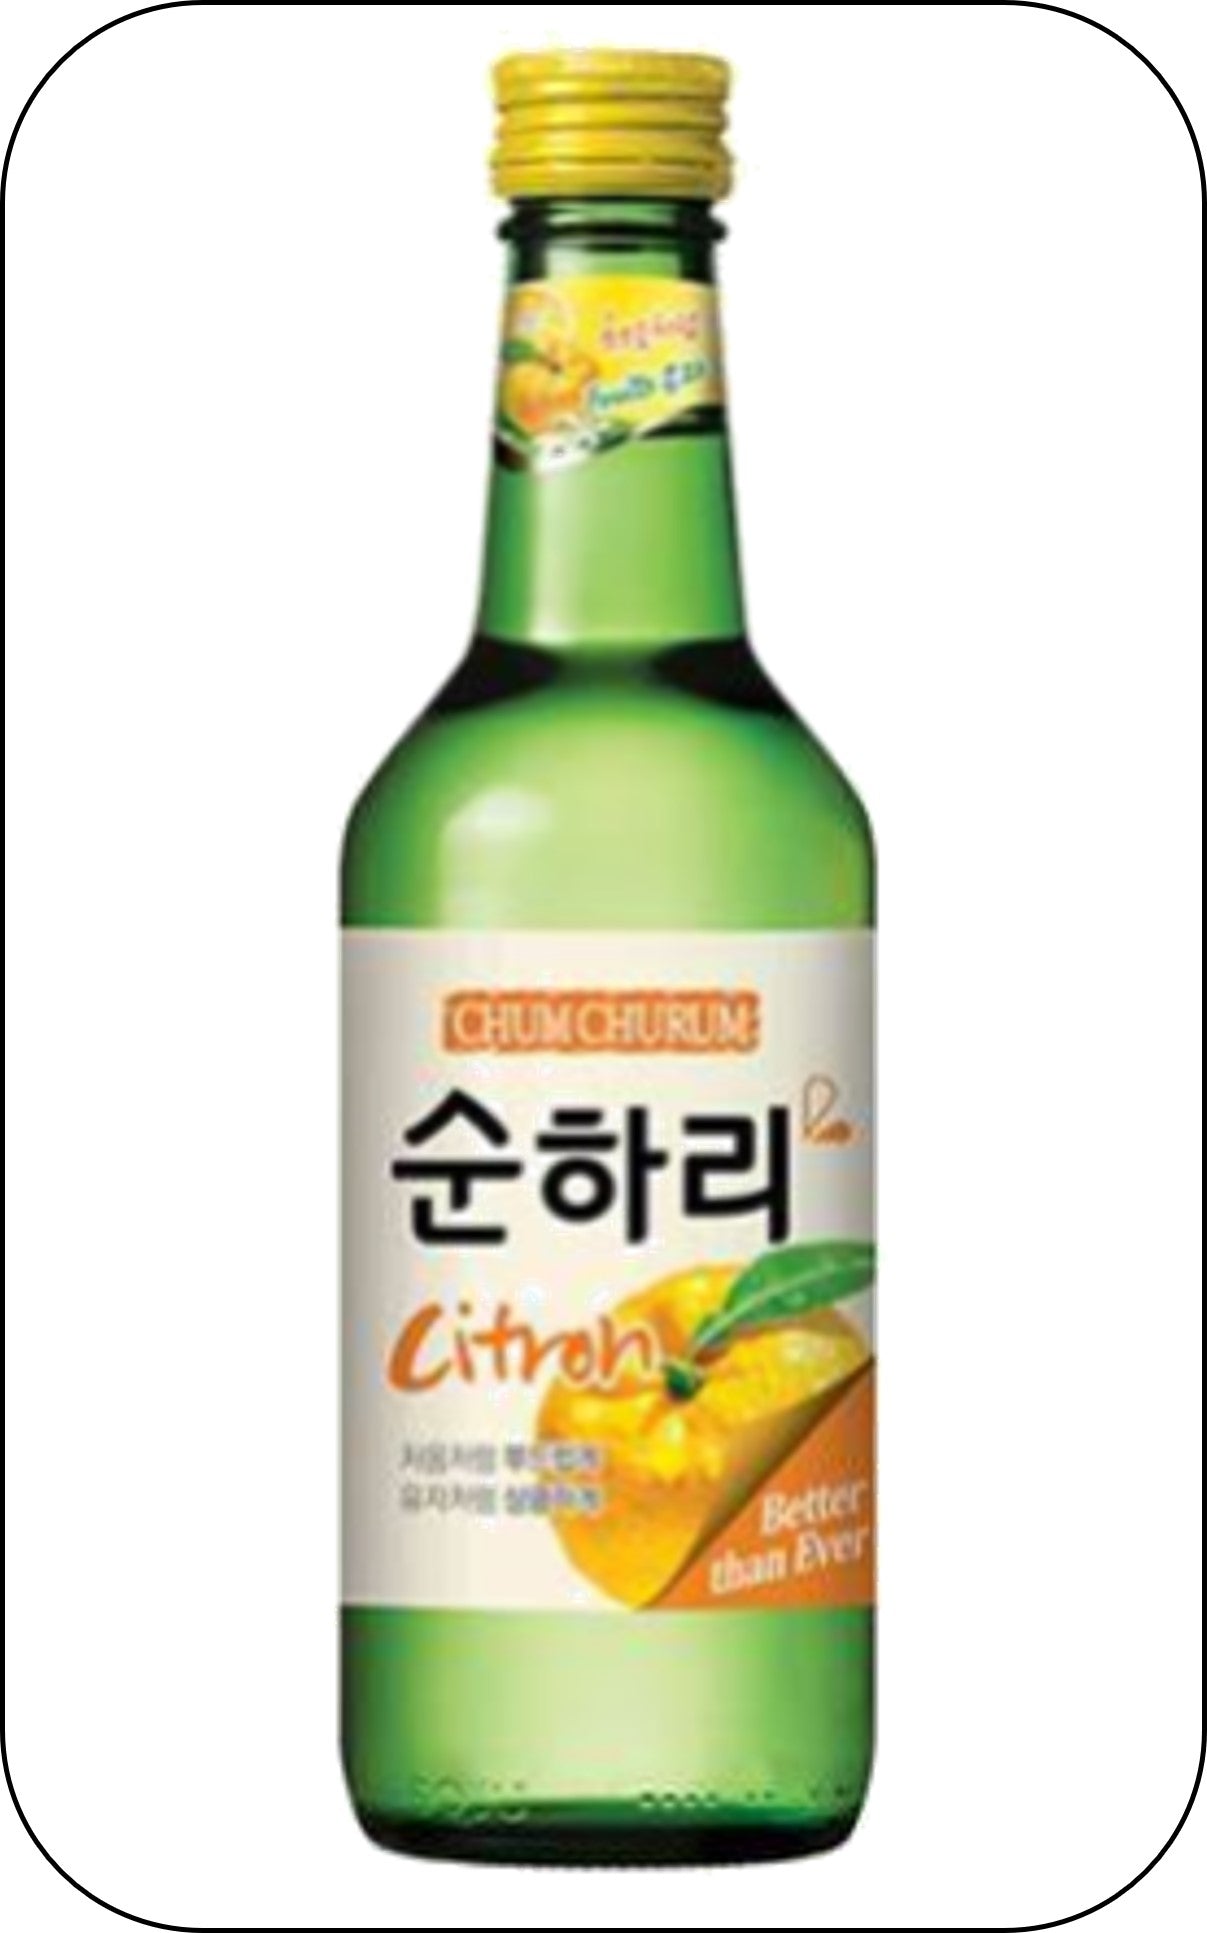 Chum Churum Korean Soju - Citron